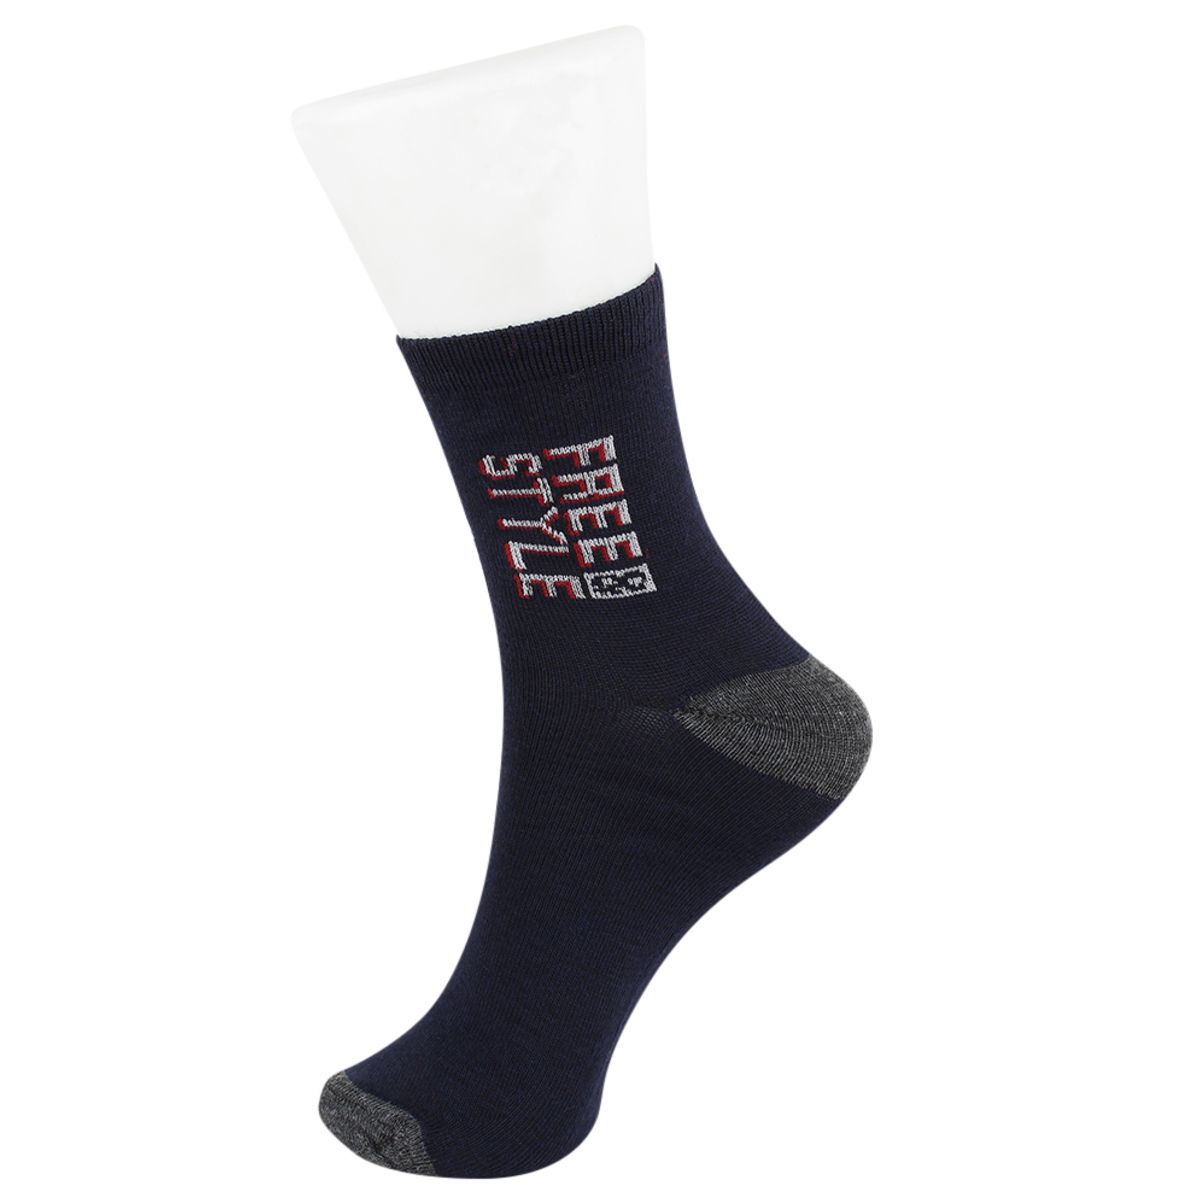 Buy SFA Socks for all Multi Colour socks at Lowest Price ...